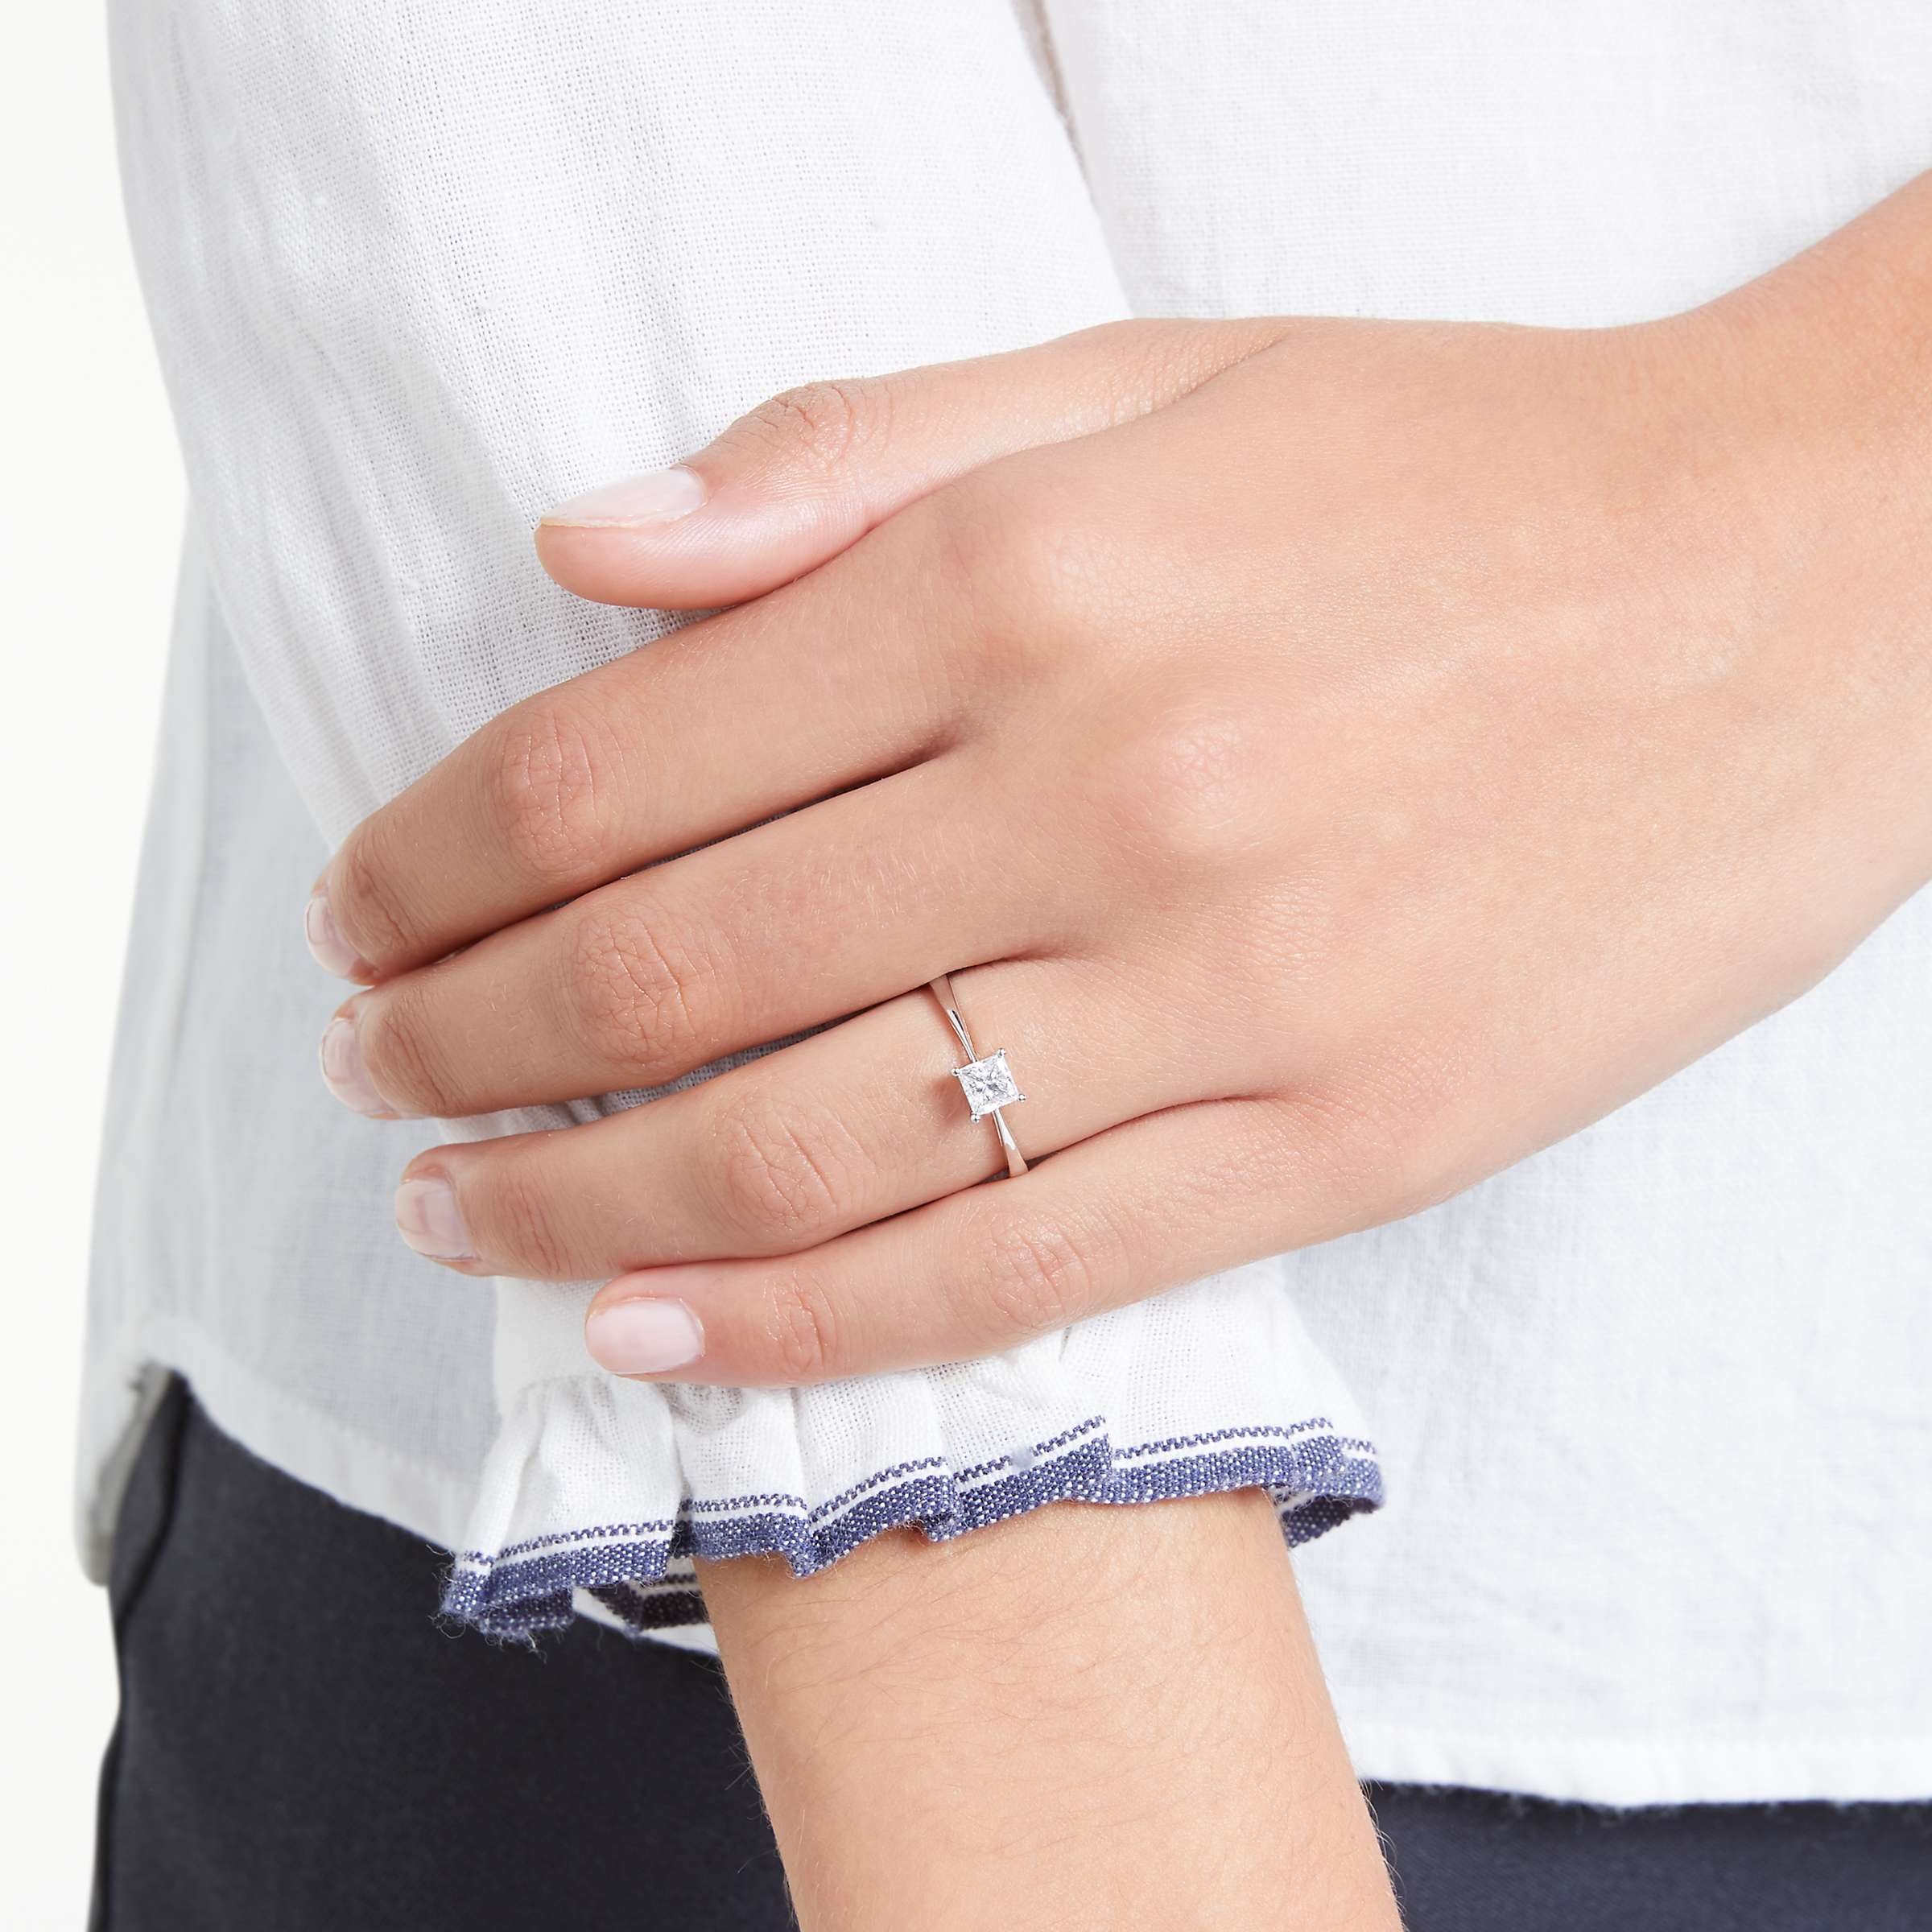 Buy Mogul 18ct White Gold Princess Cut Diamond Engagement Ring, 0.5ct Online at johnlewis.com